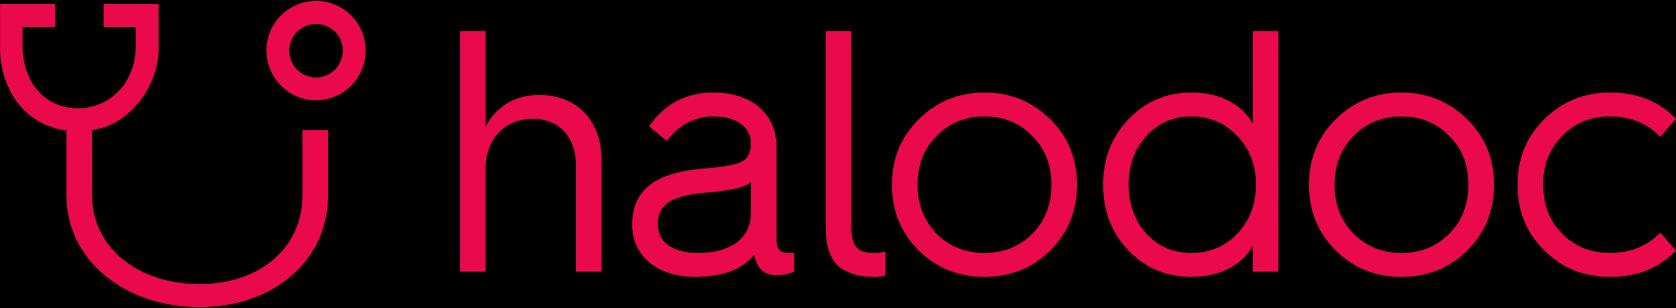 Halodoc_logo